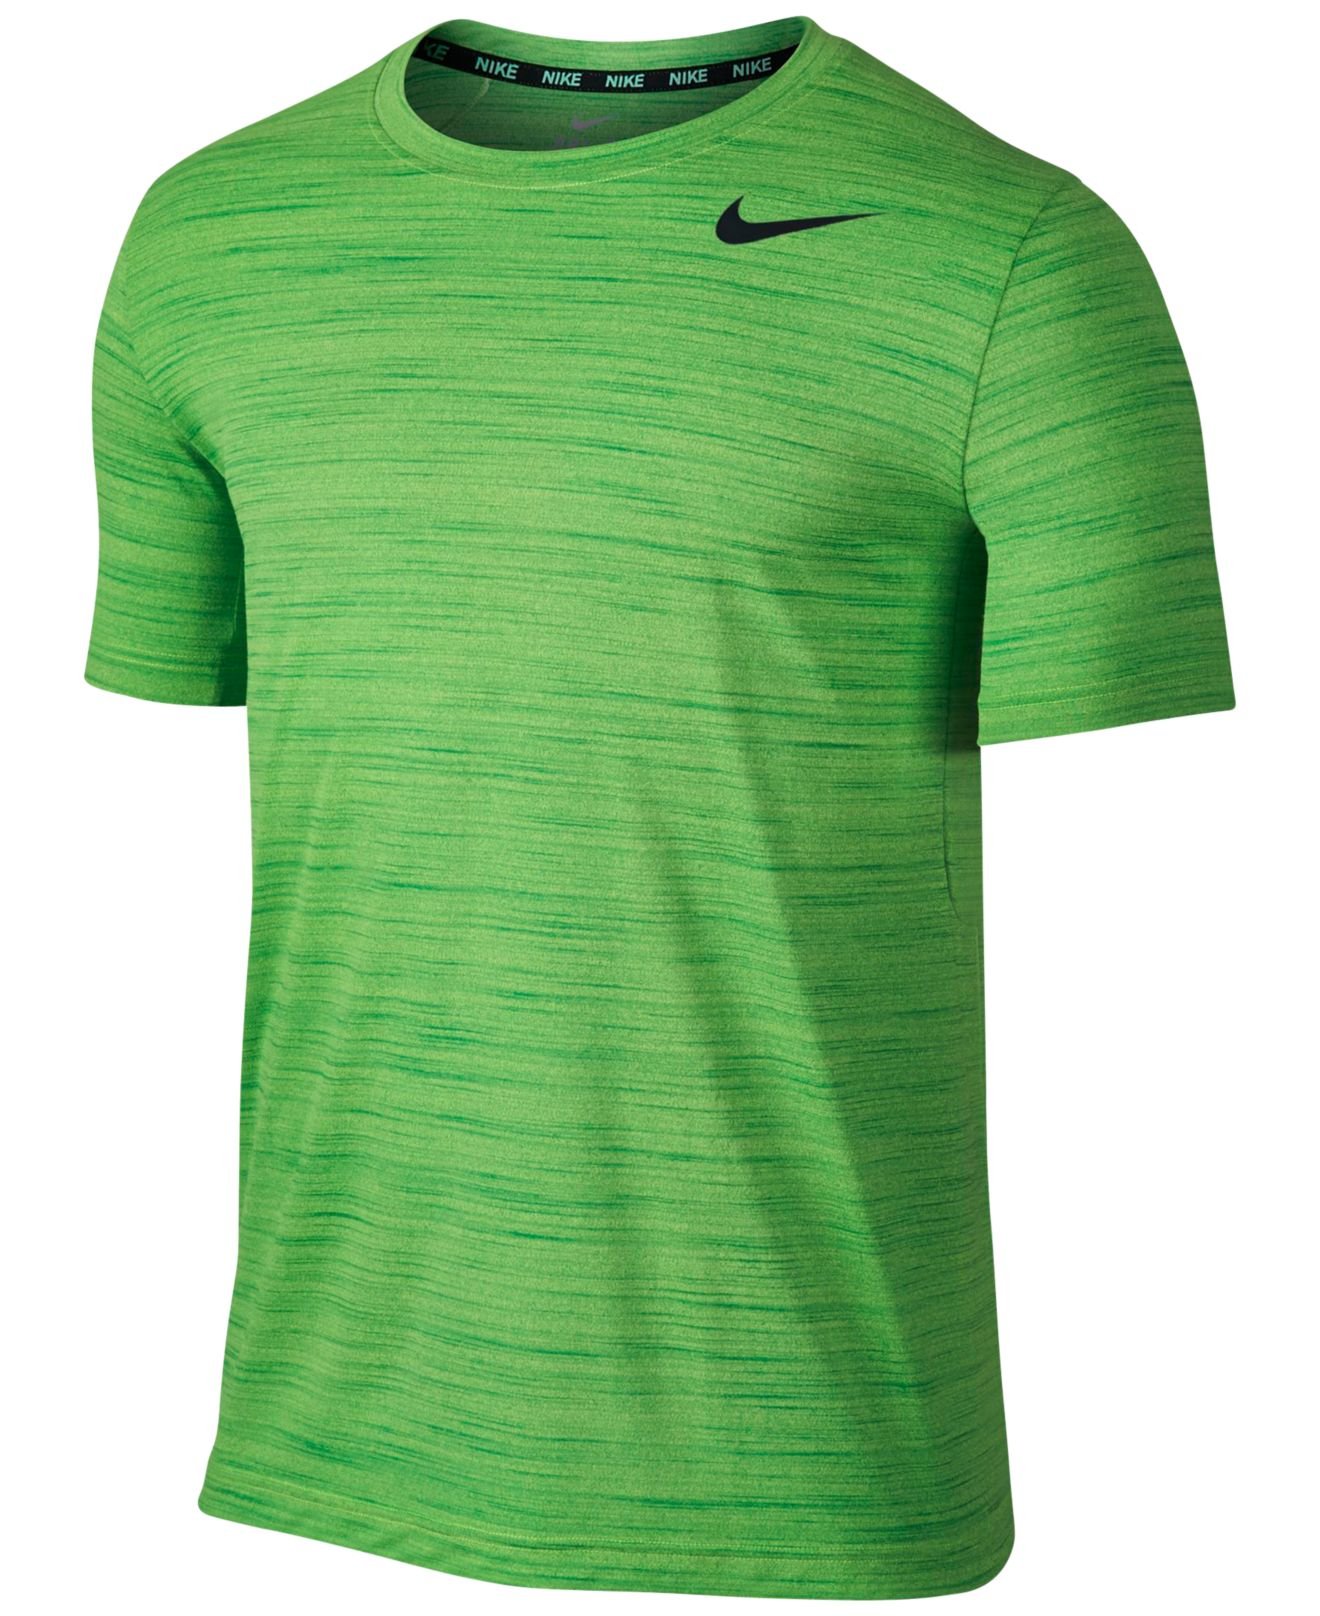 Nike men's running tee green slim fit size small blog.knak.jp